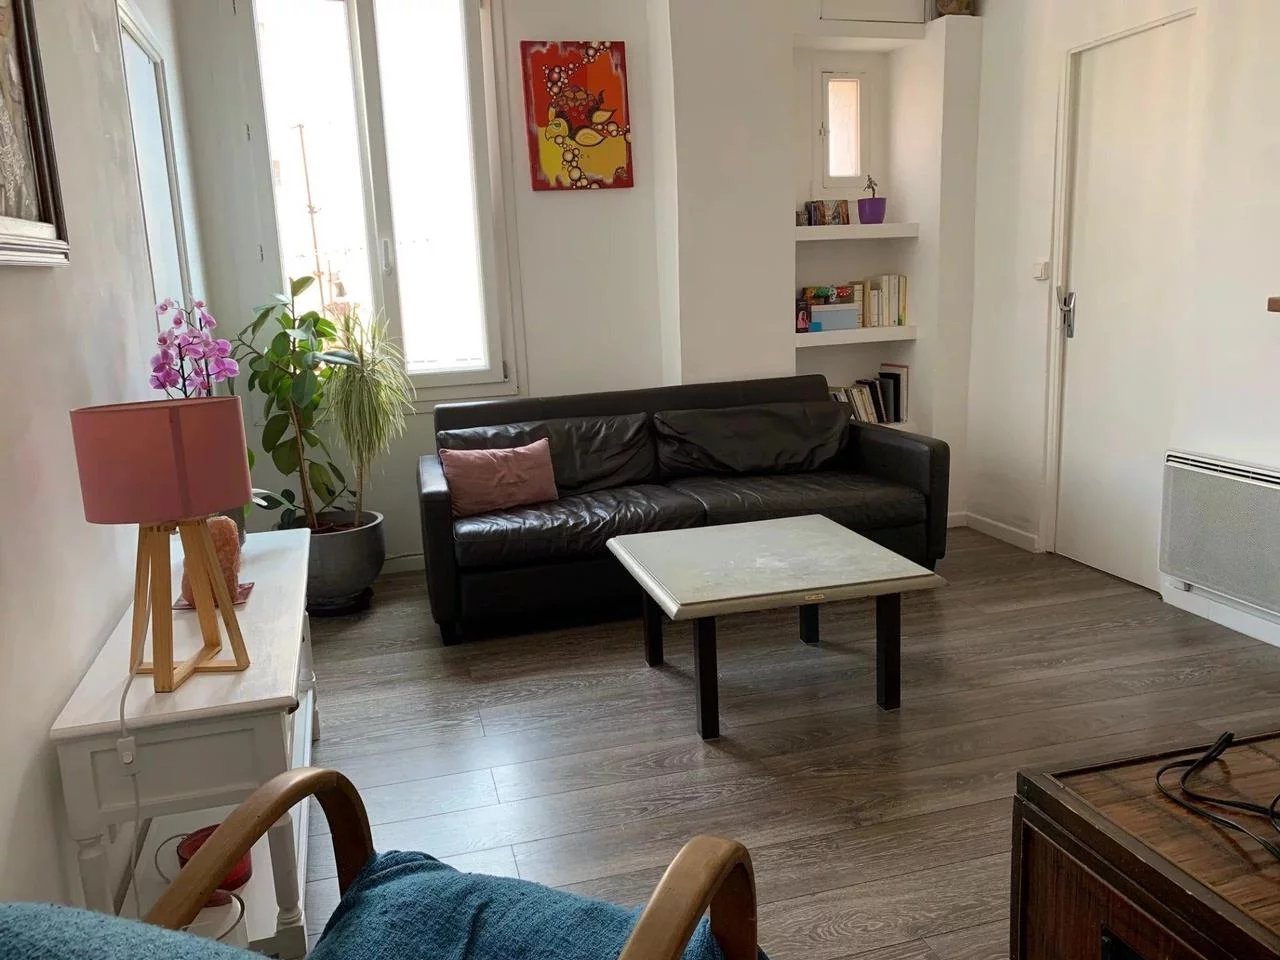 Appartement  3 Locali 49m2  In vendita   210 000 €